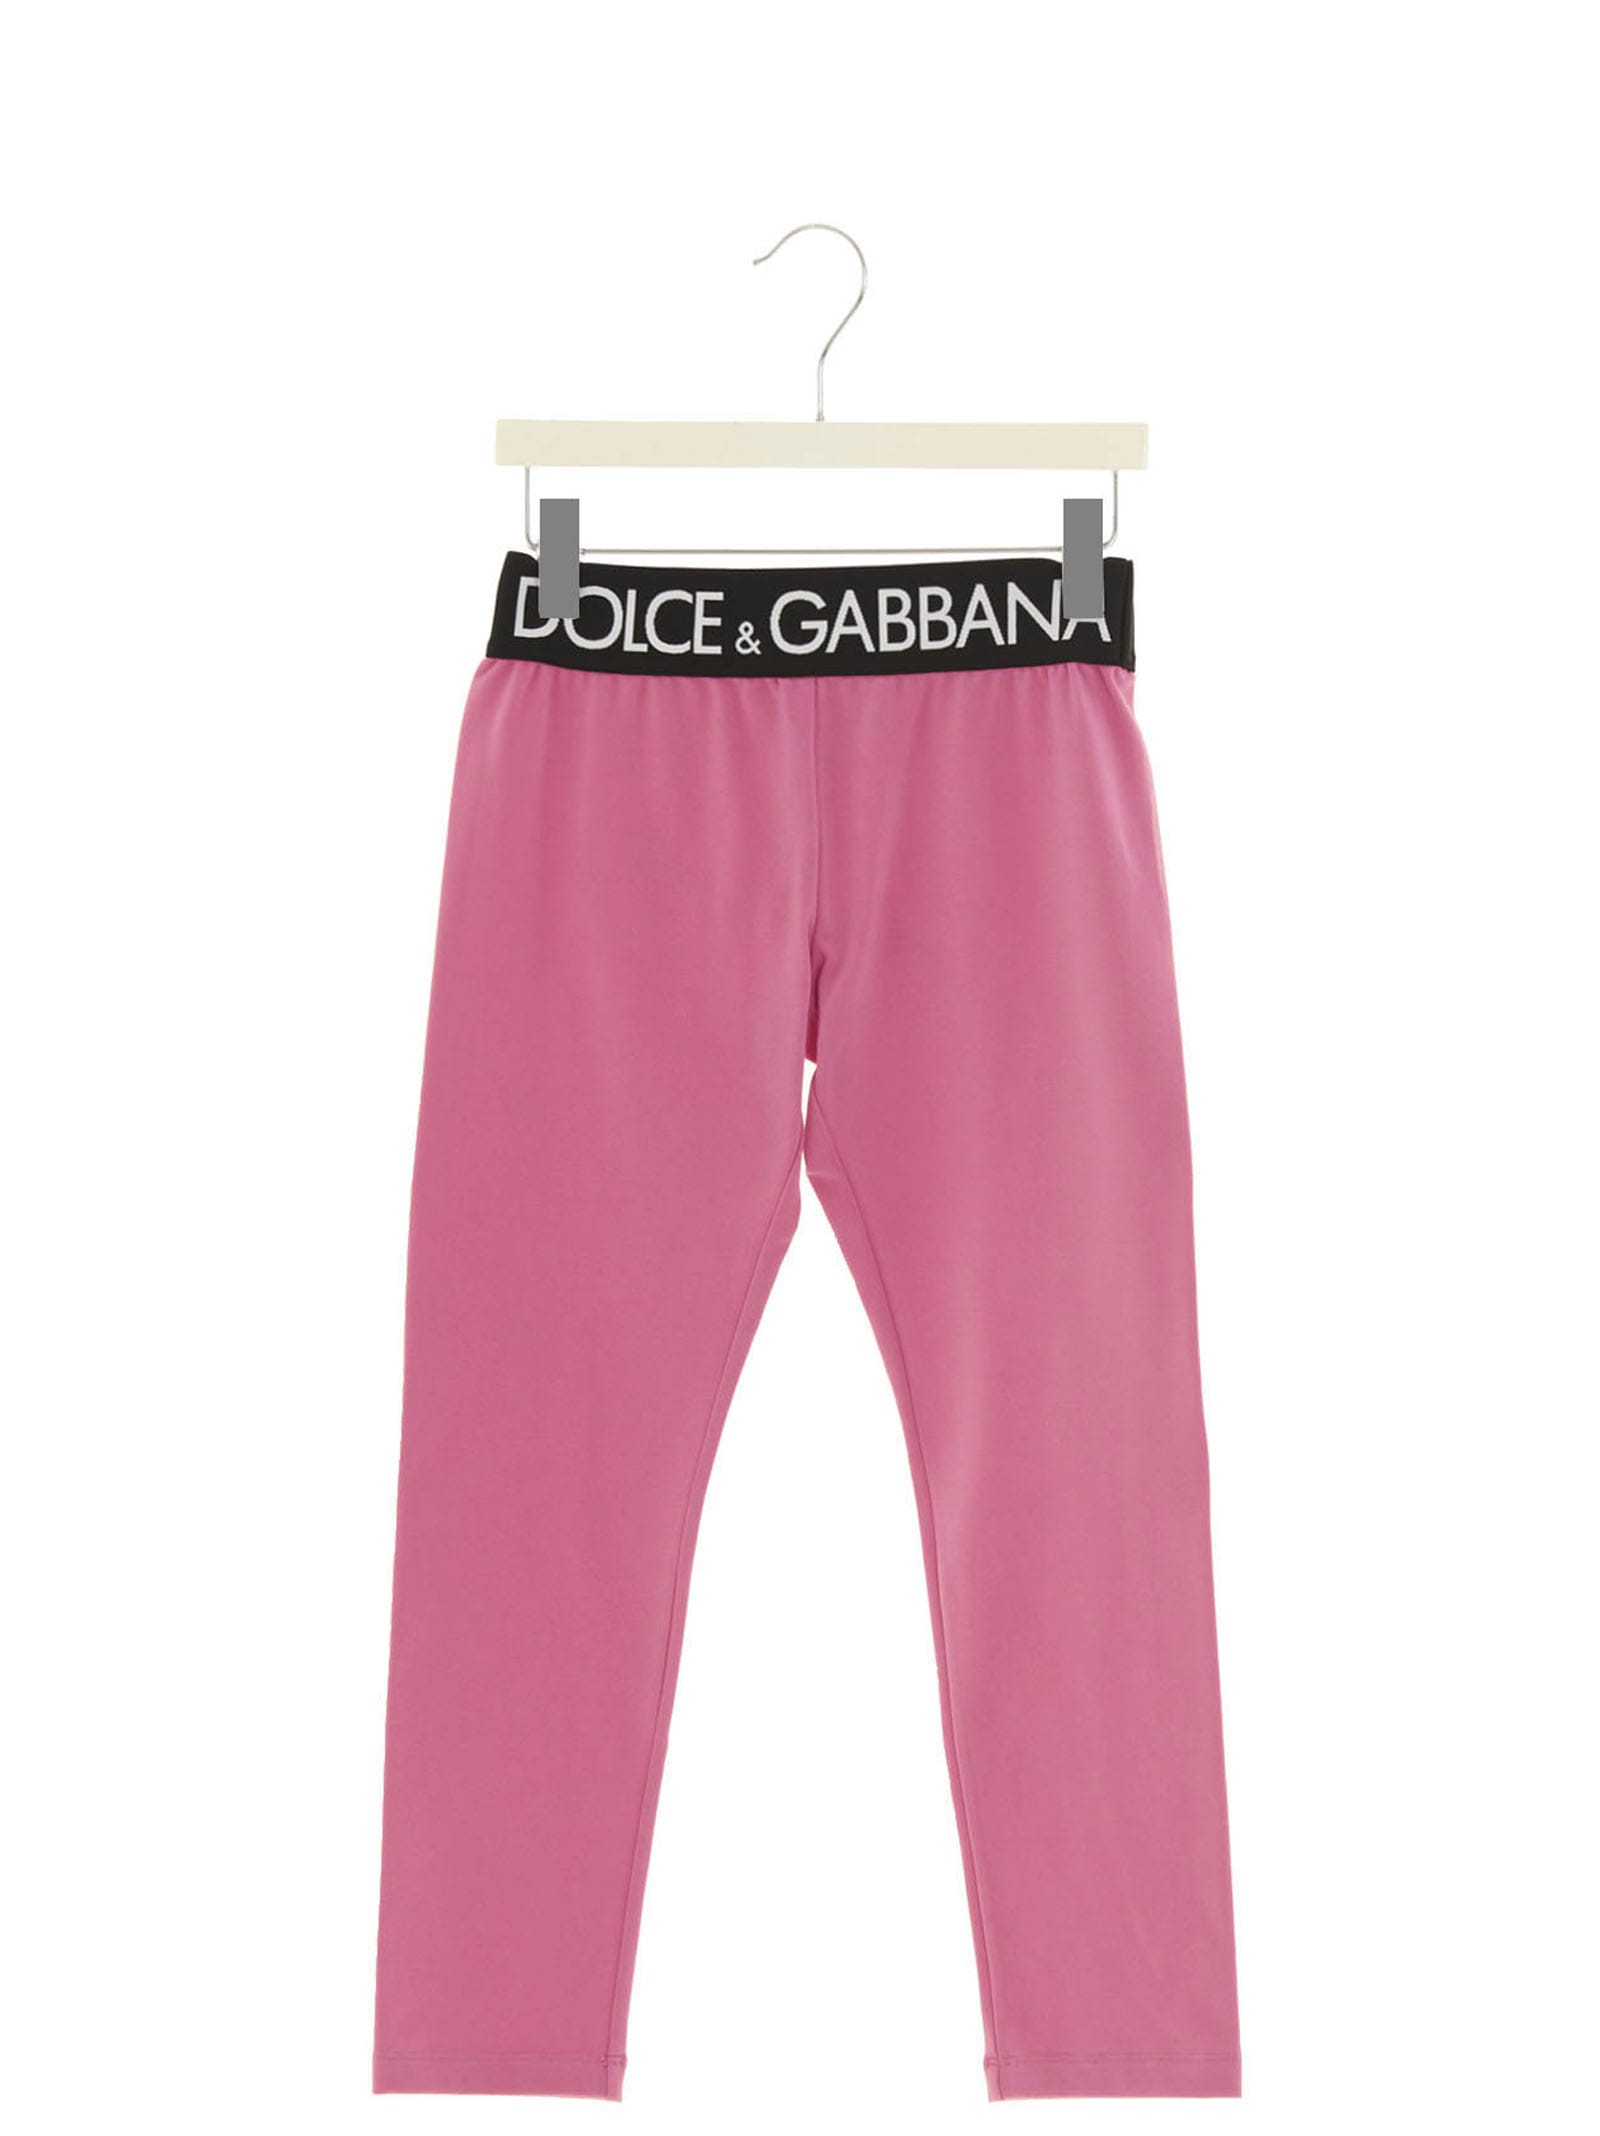 Dolce & Gabbana Logo Elastic Leggings